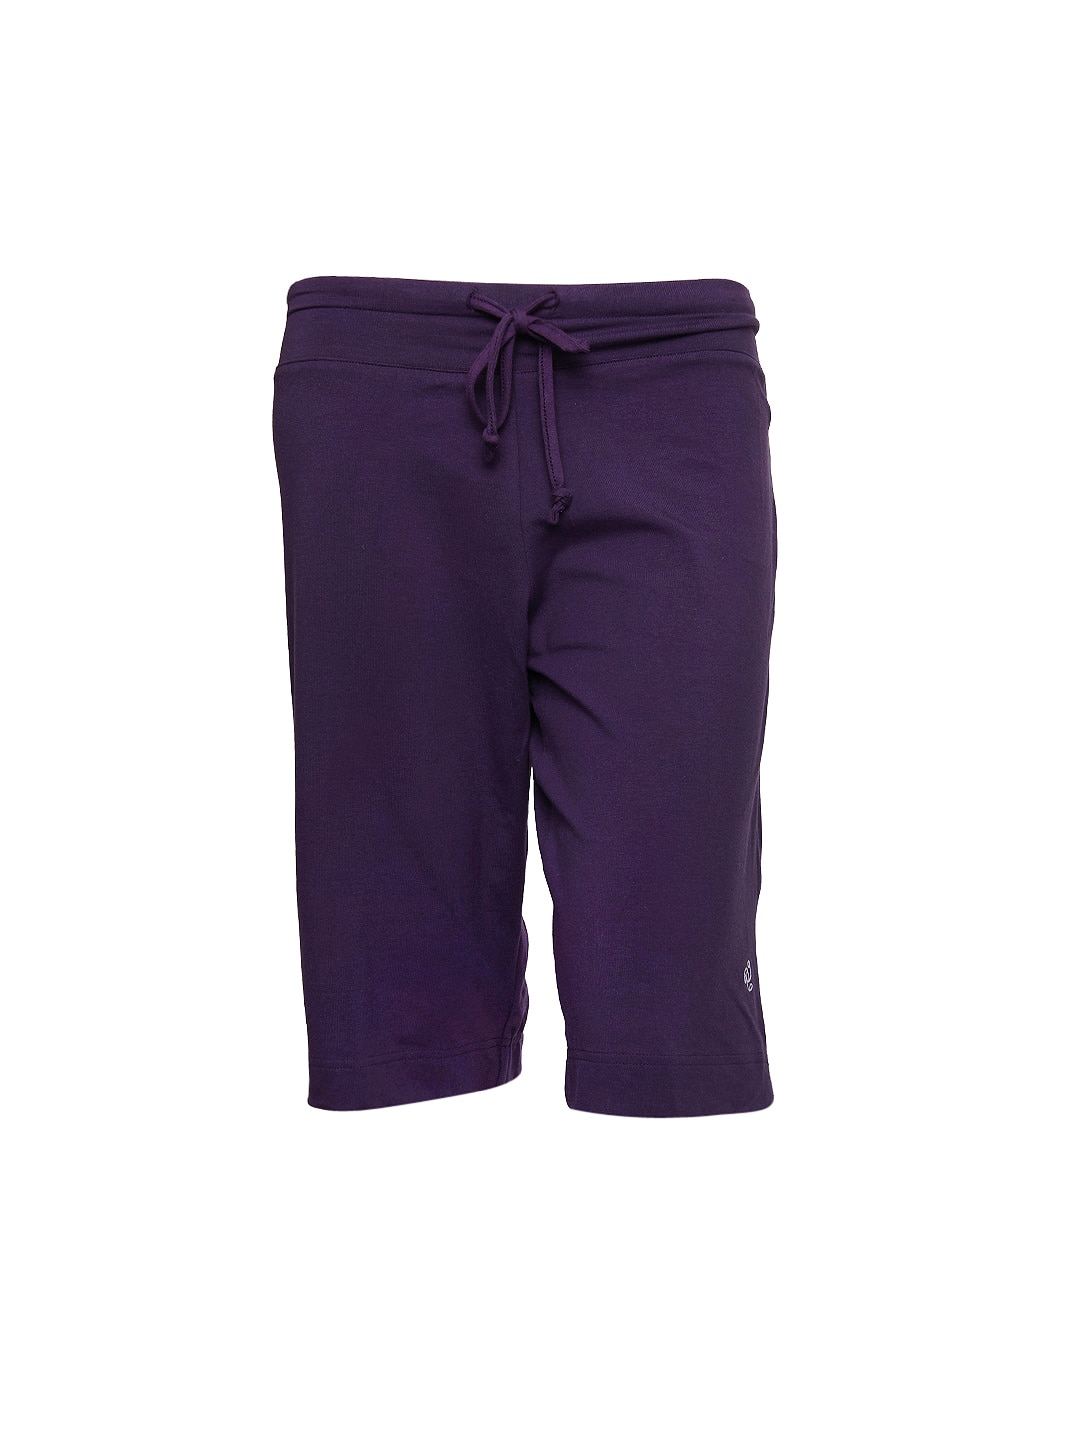 Jockey Women Purple Lounge Shorts 1308